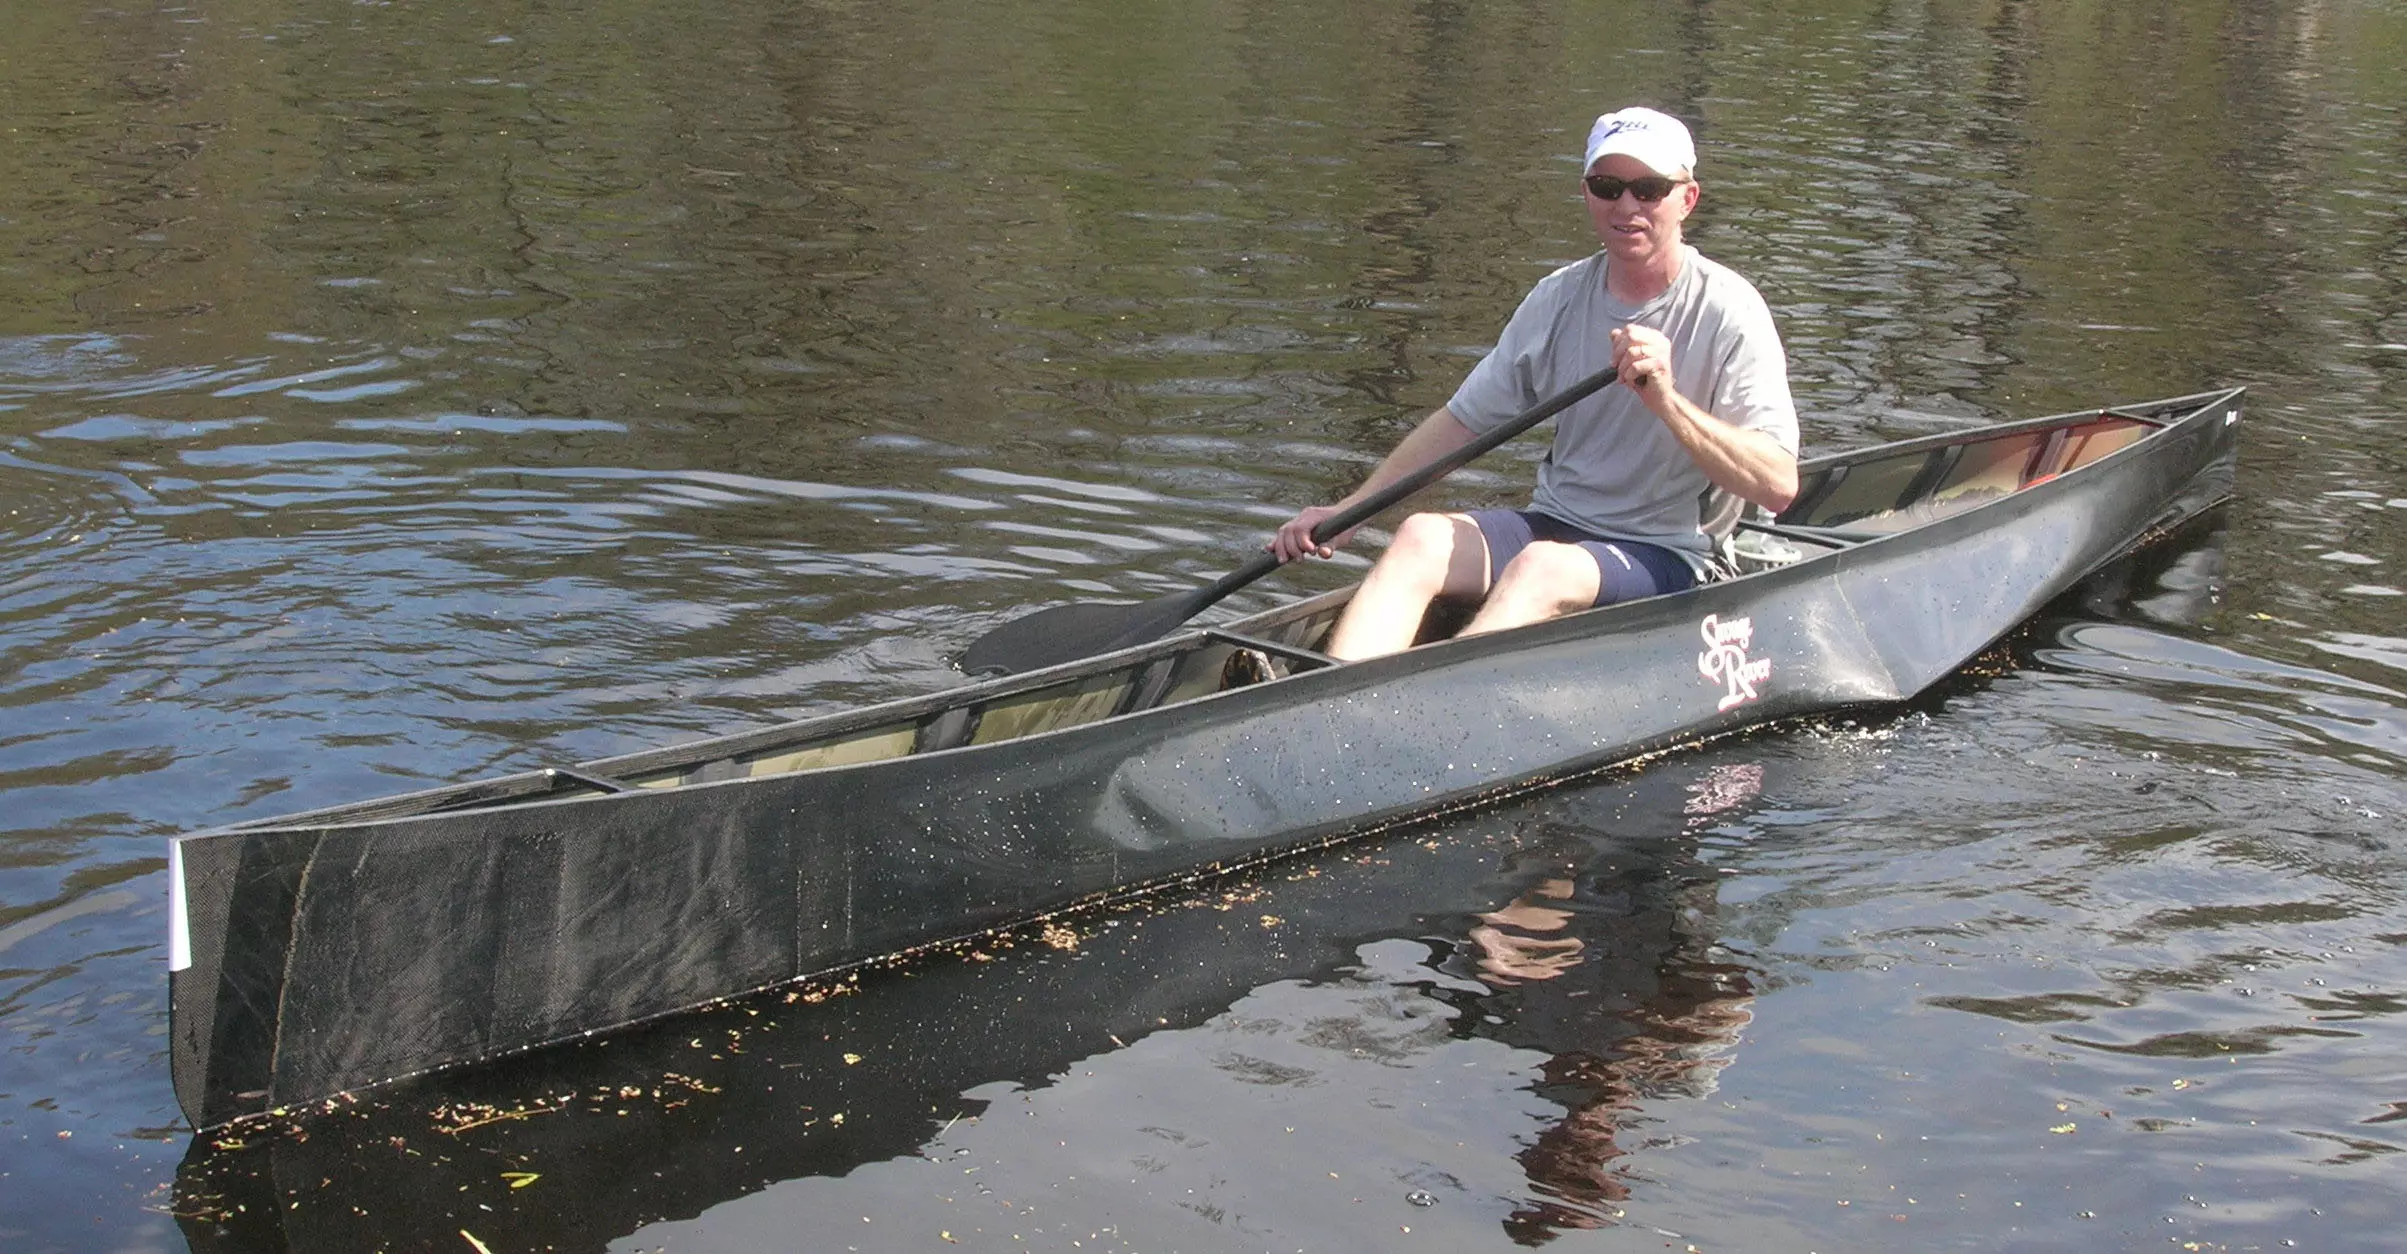 Racing Canoe